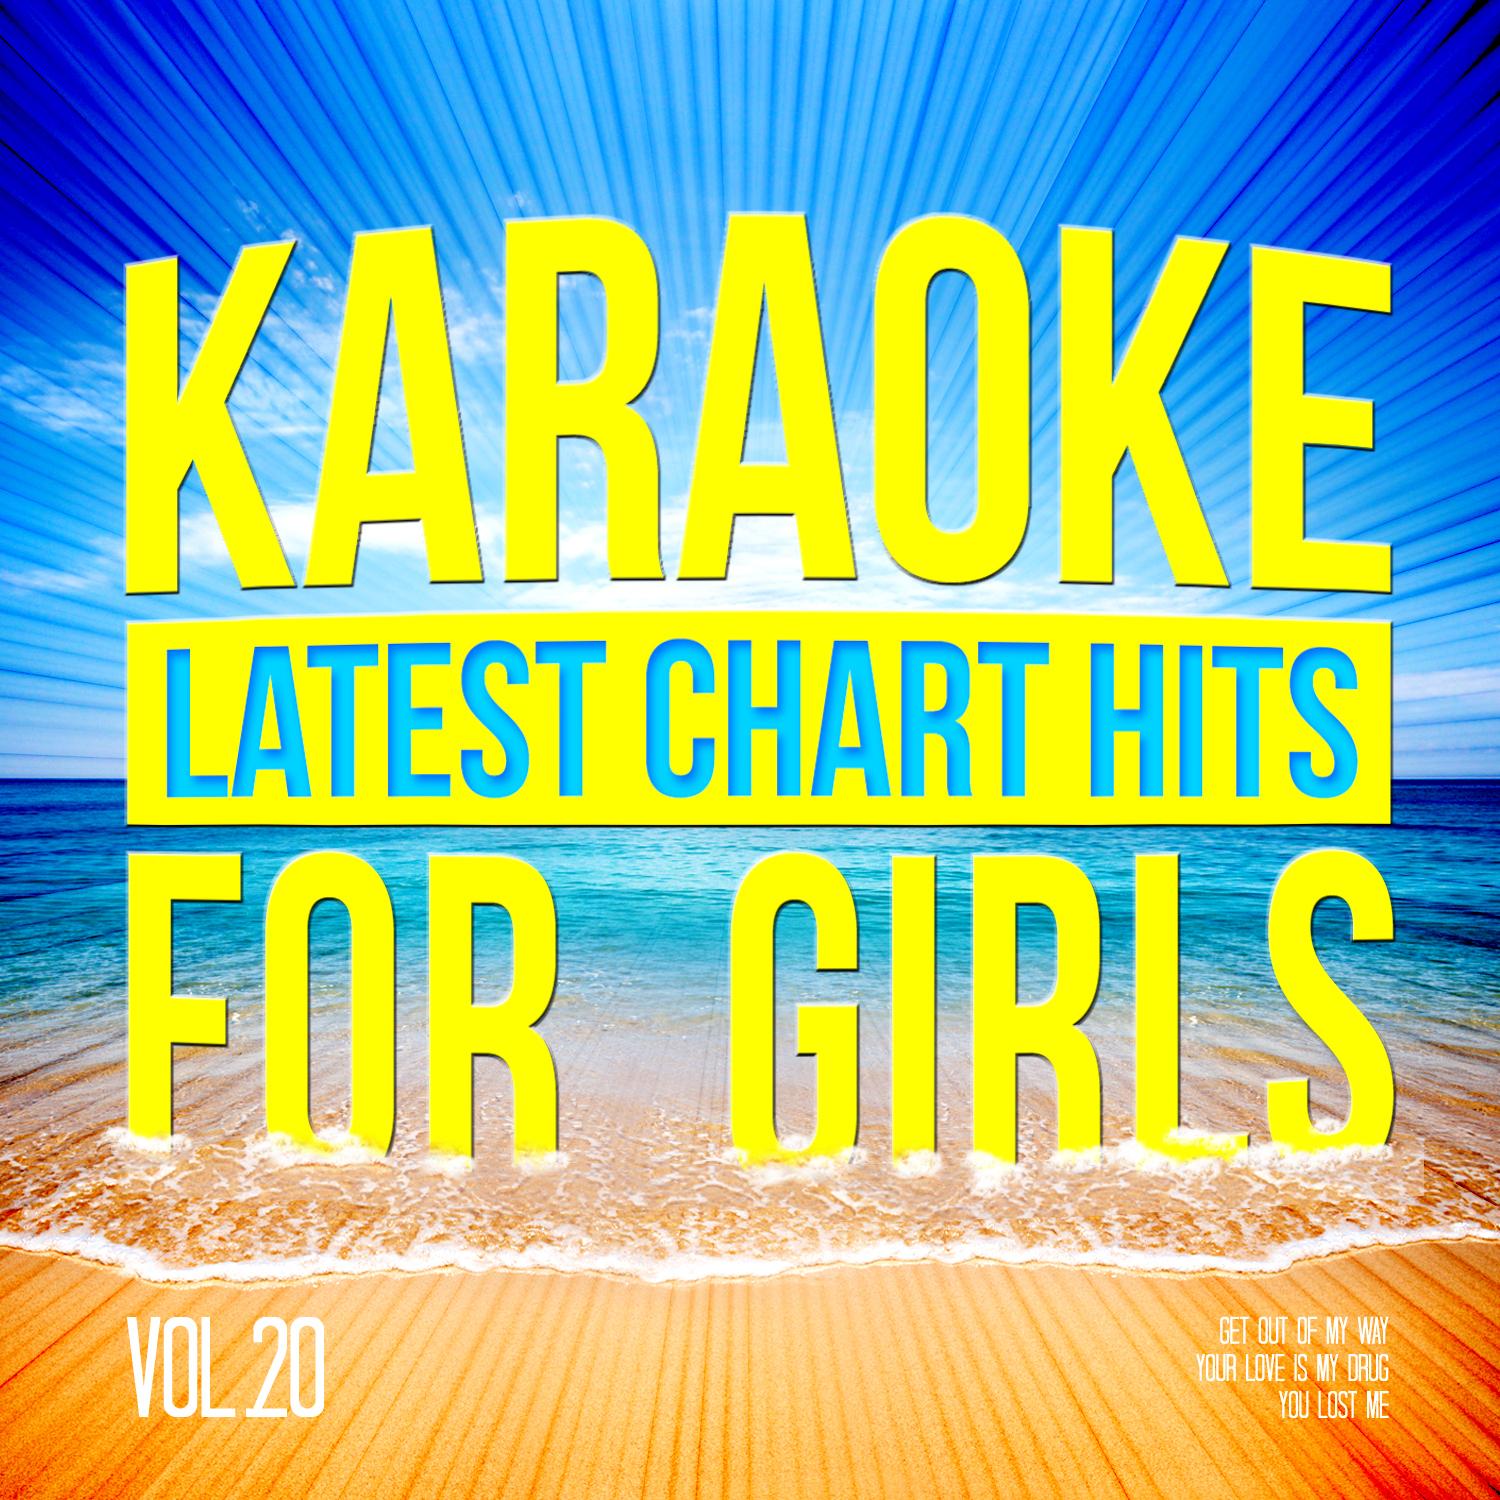 Karaoke - Latest Chart Hits for Girls, Vol. 20